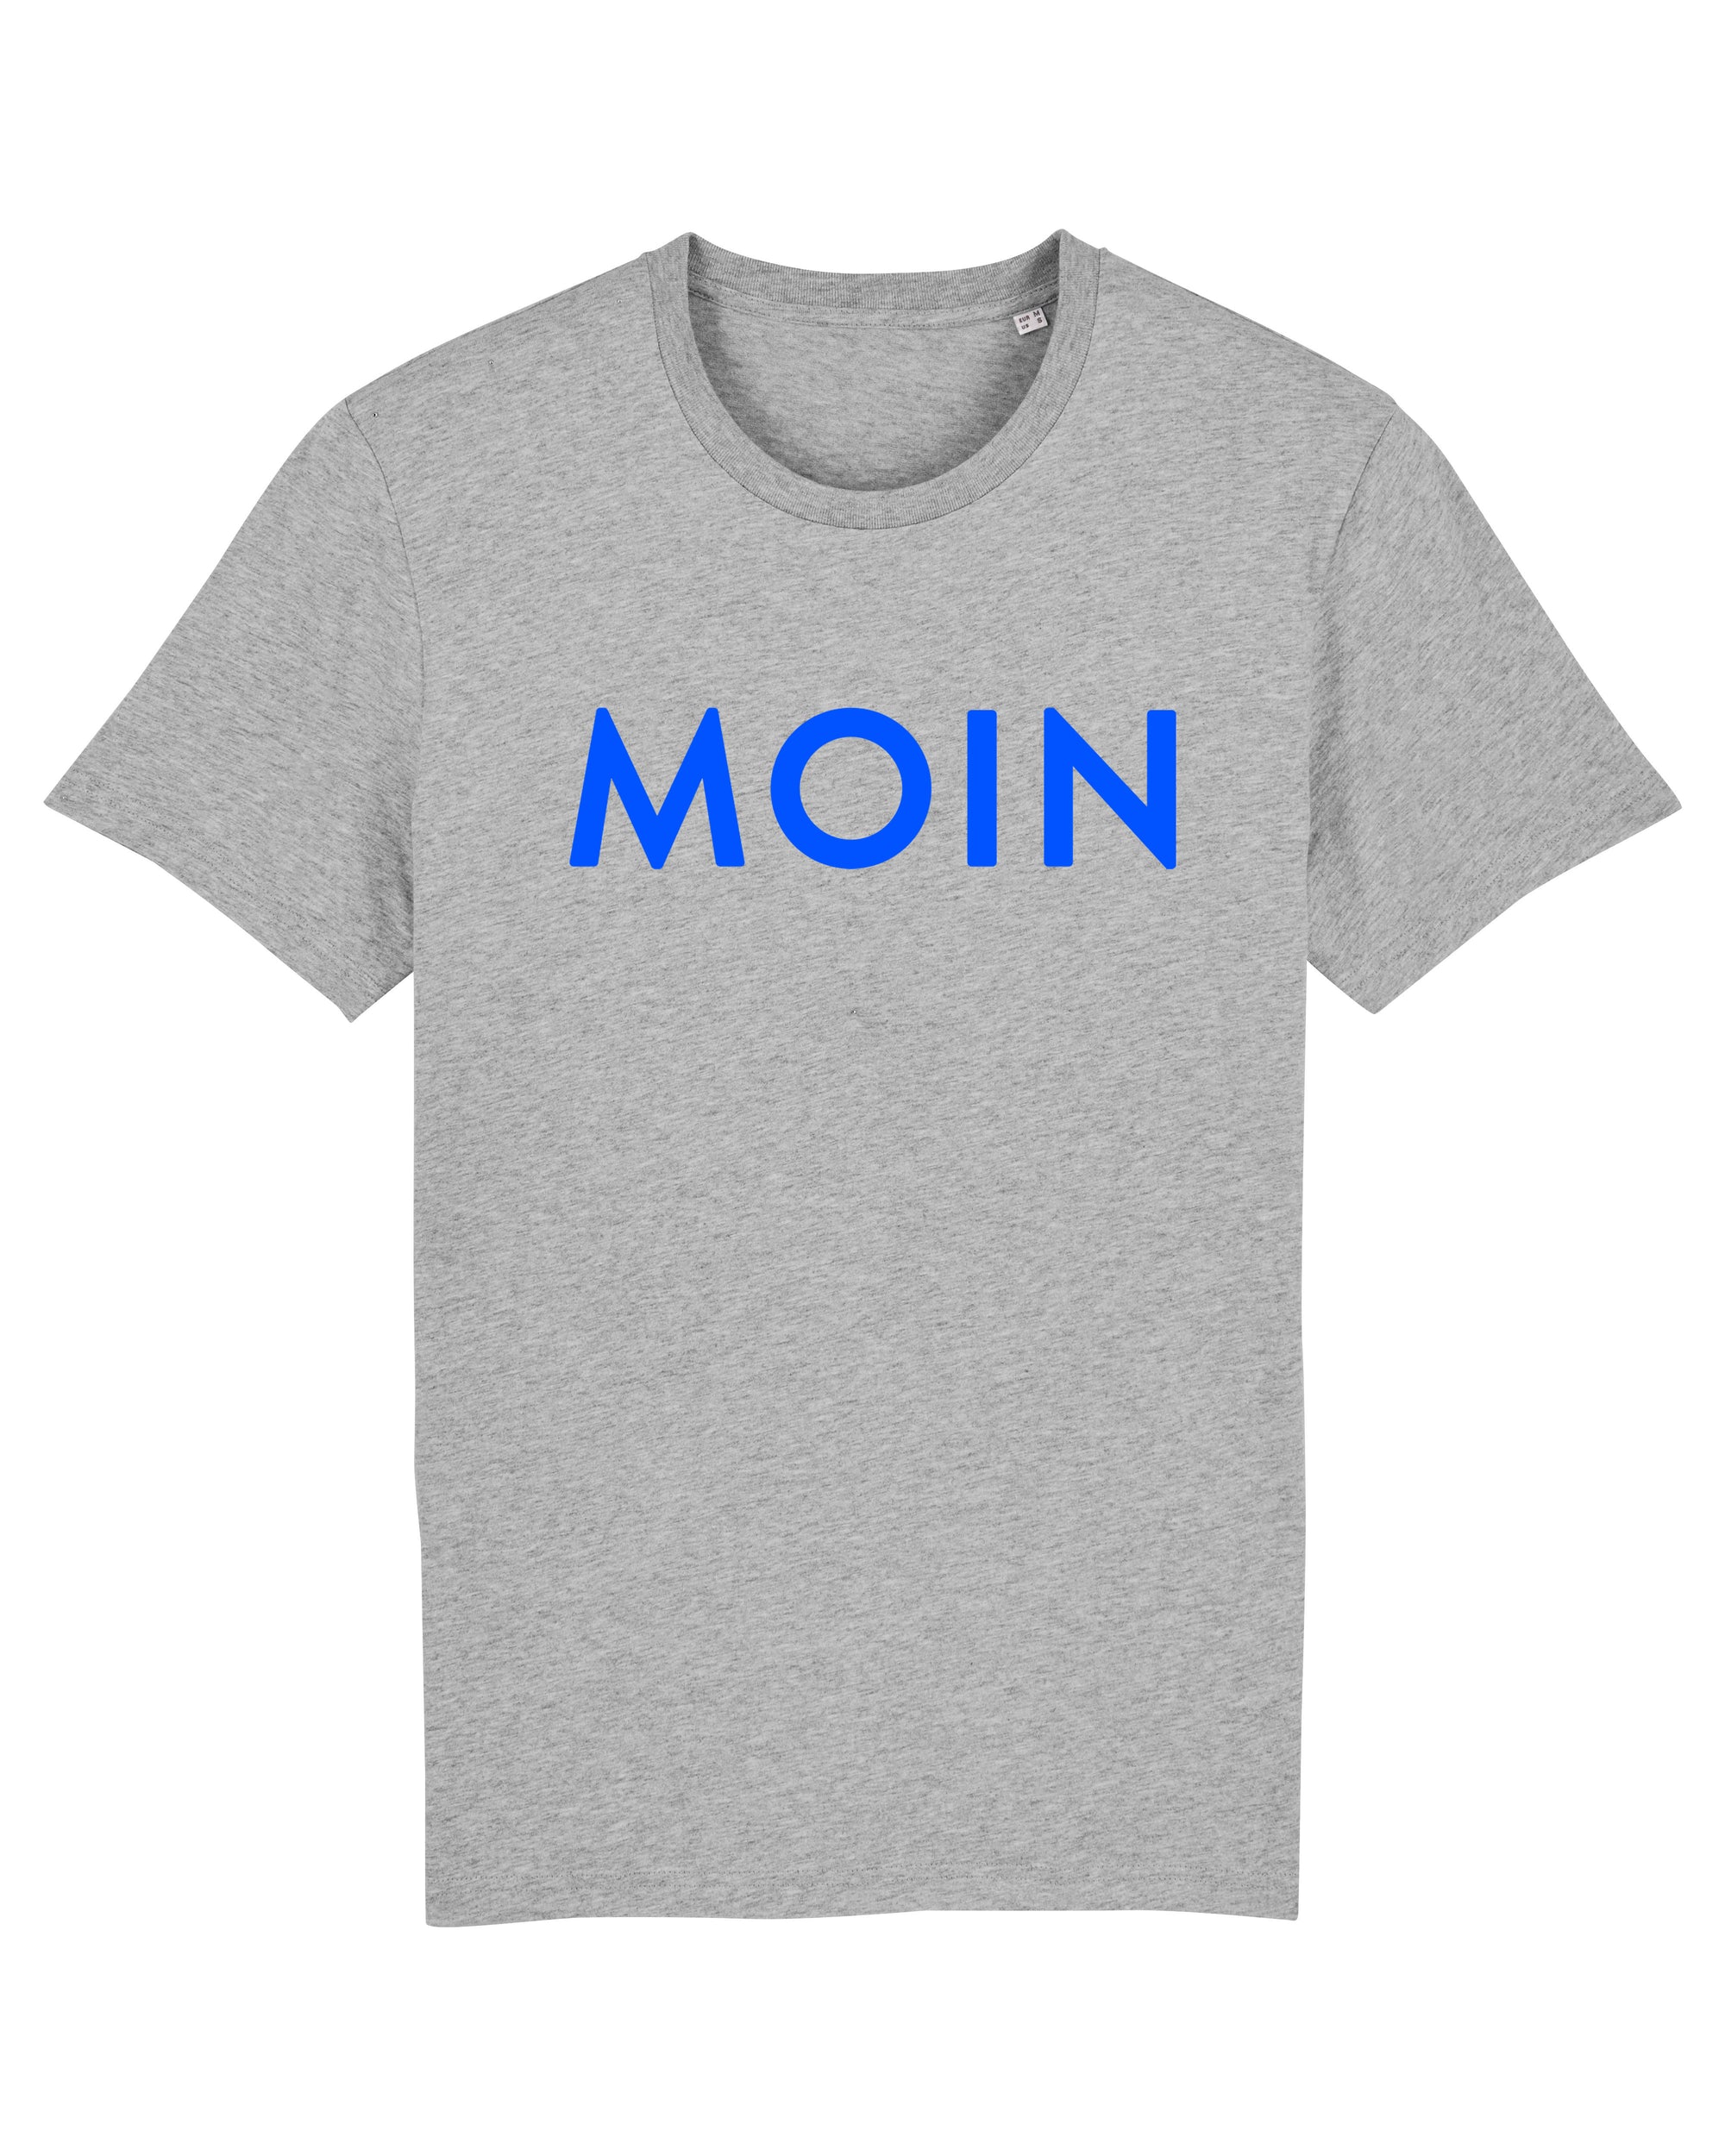 T-Shirt "Moin" Heather Grey/Neonblau